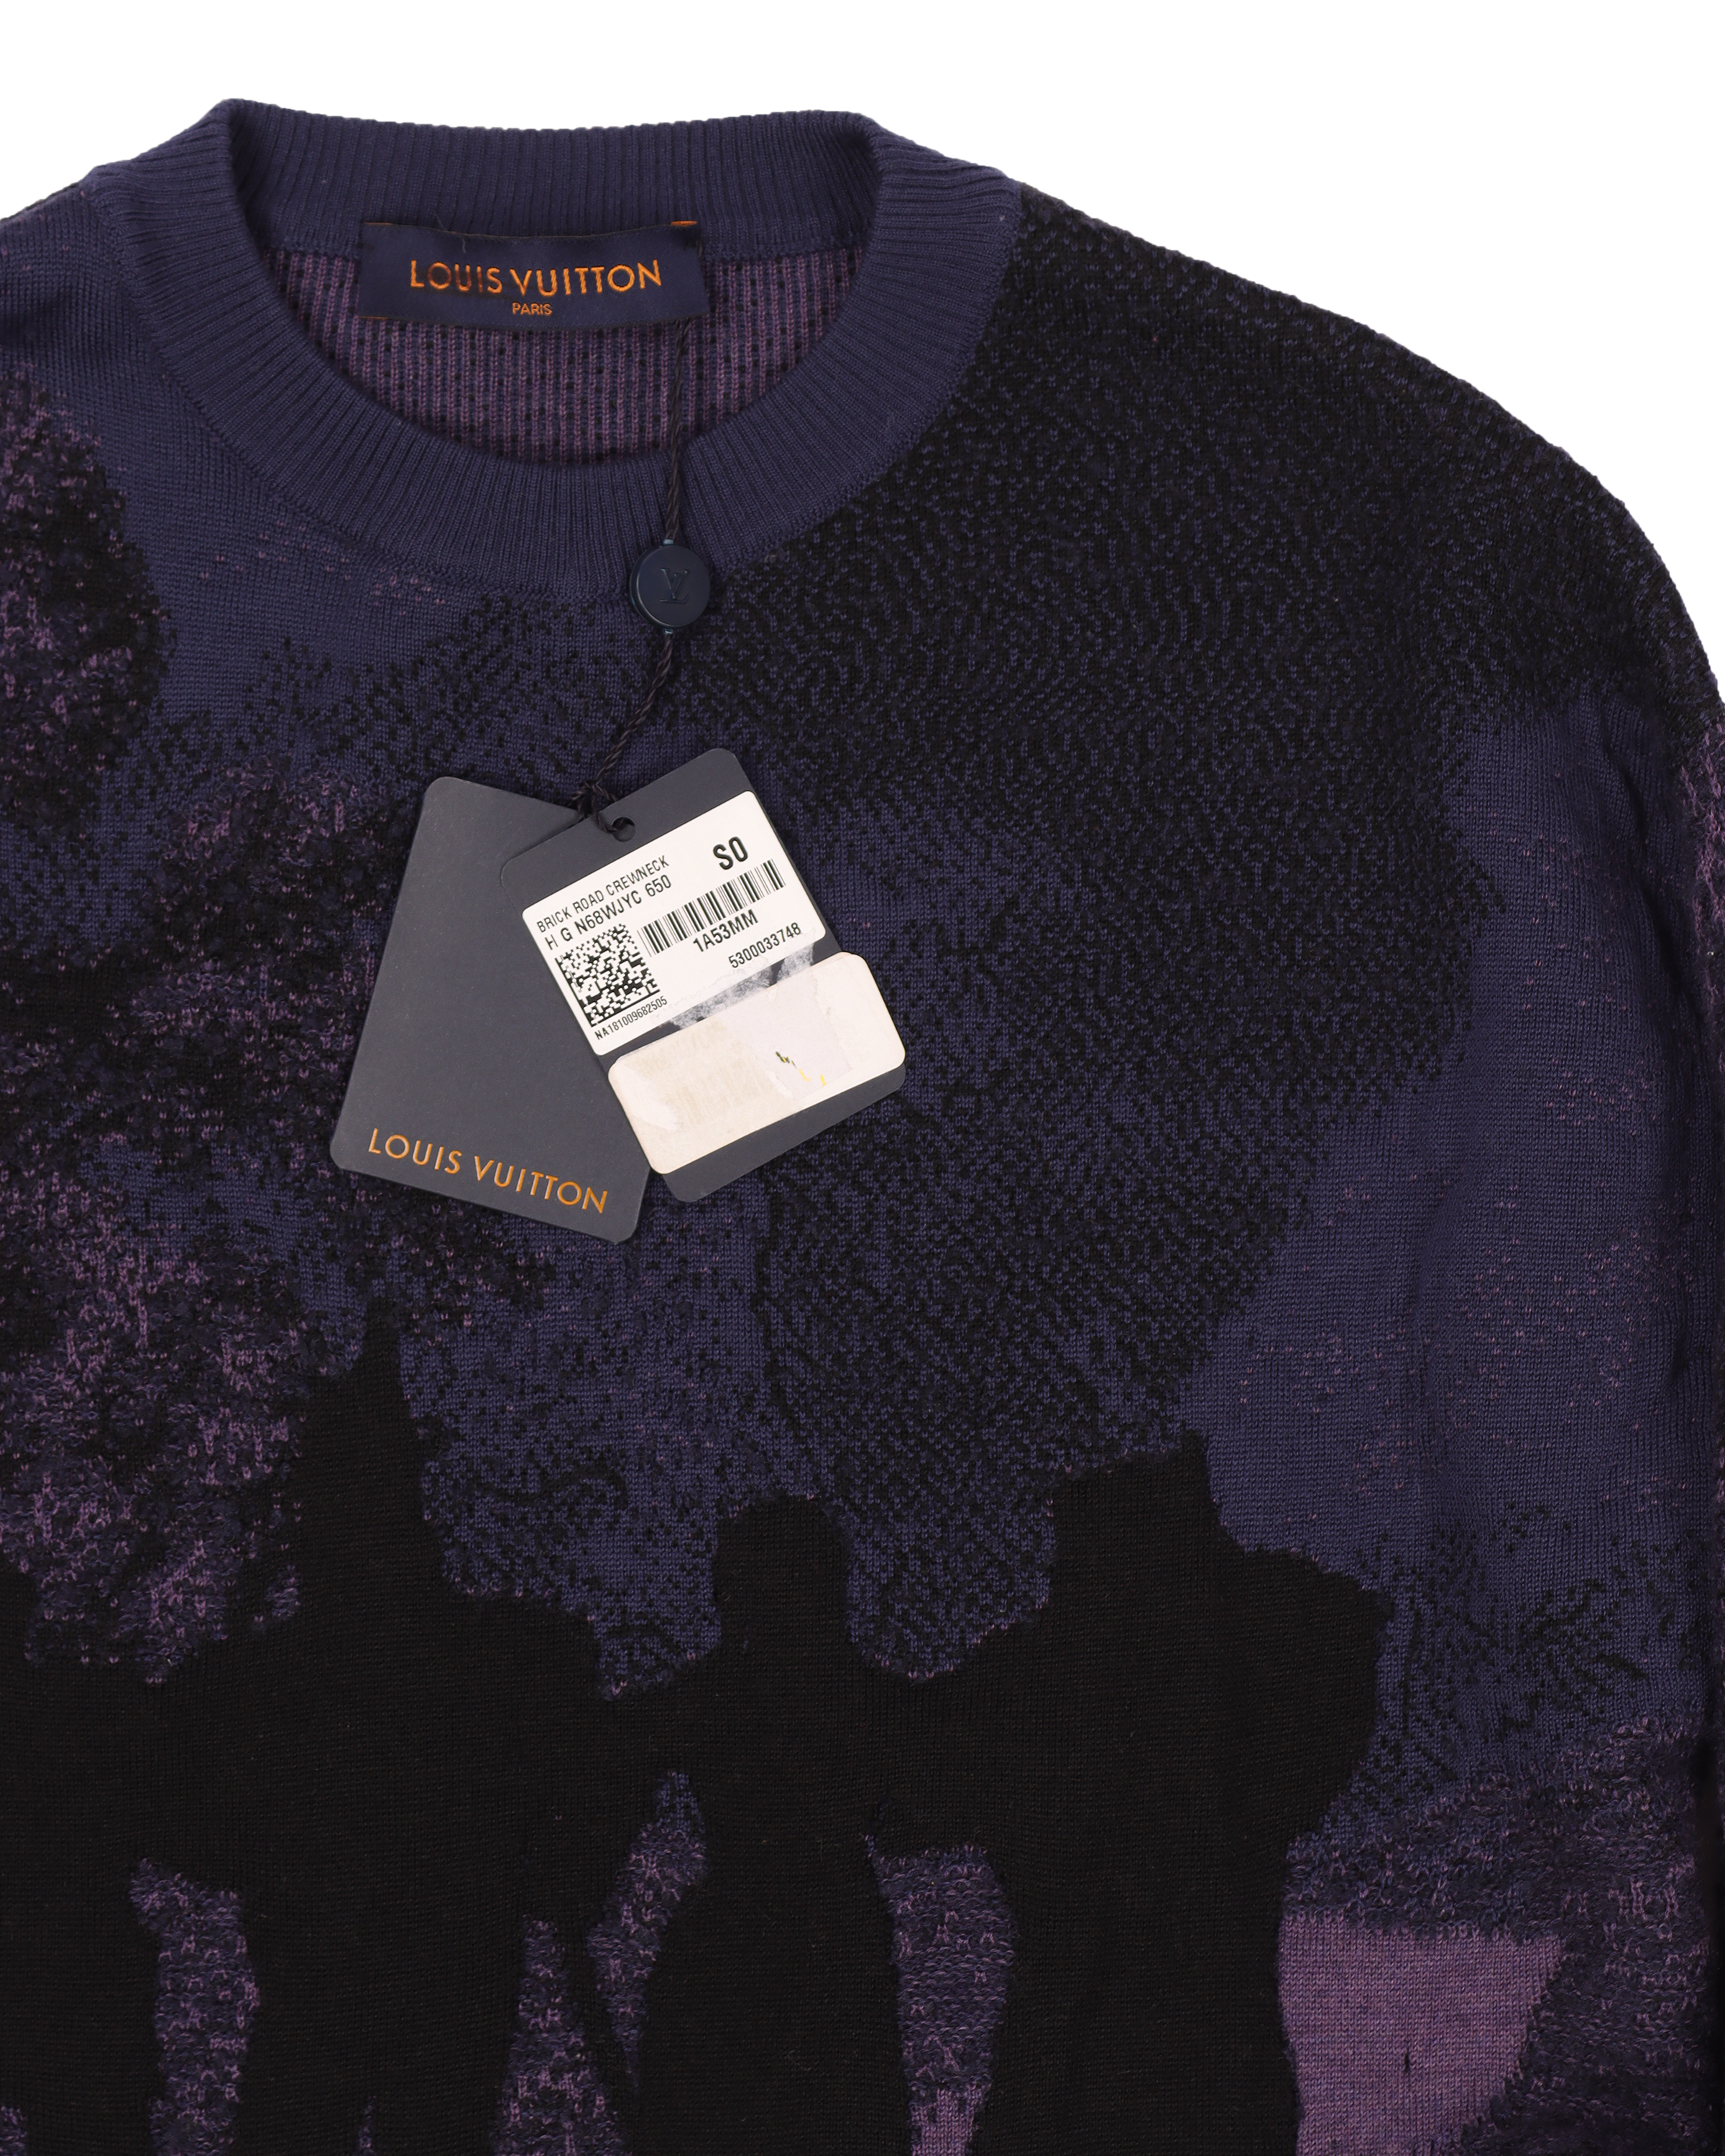 LV SS19 runway brick road sweater in purple SIZE:S